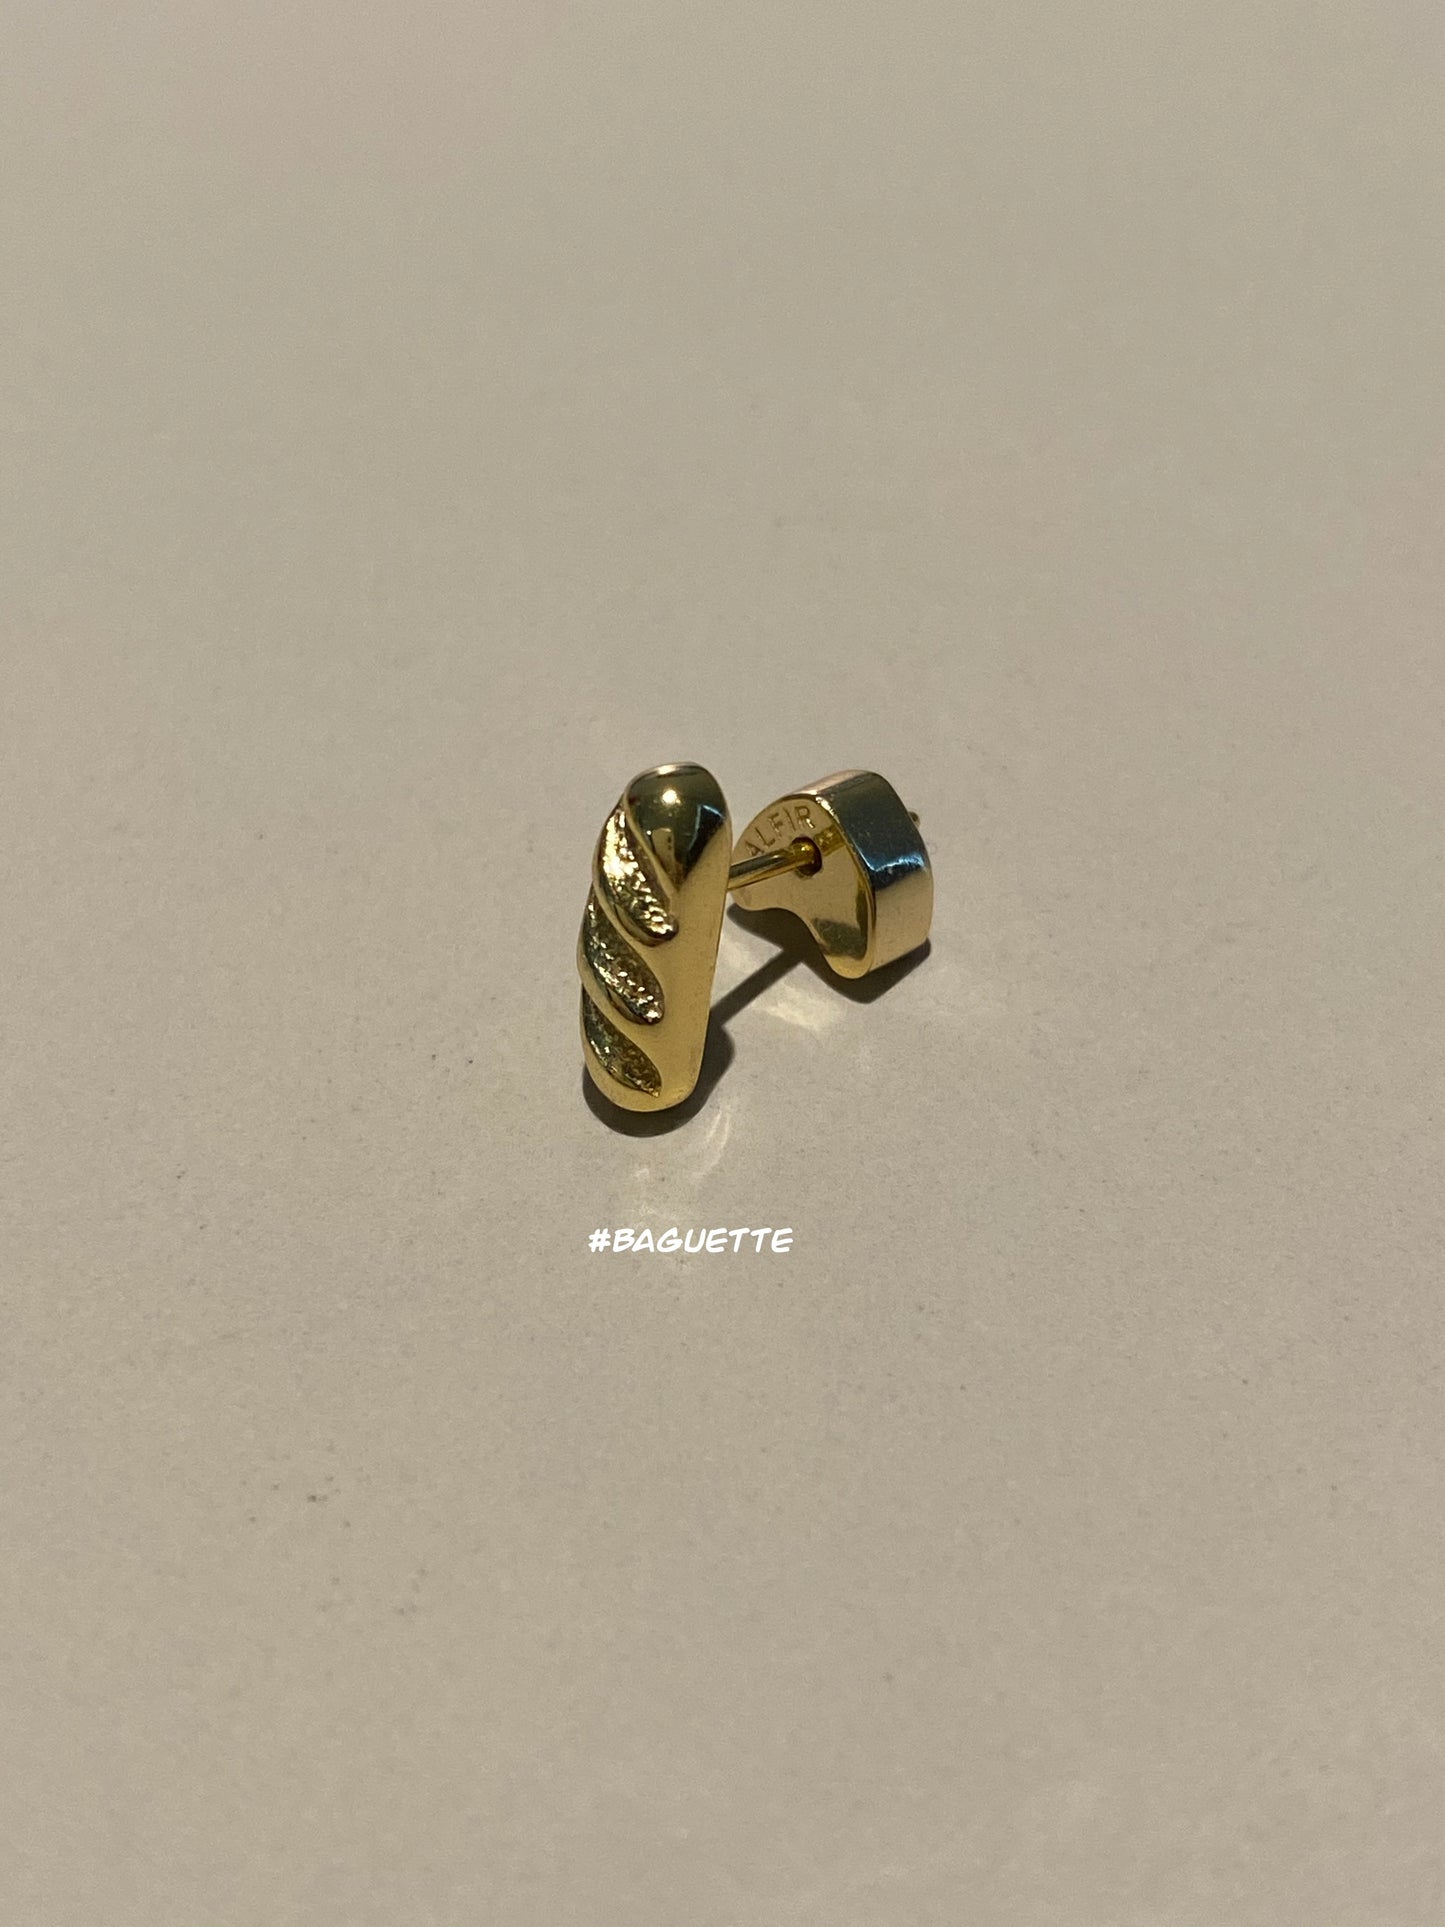 Bakery Earrings Collection - Croissant, Pretzel, Baguette & Bagel Charms in 925 Gold Vermeil - Single Earing